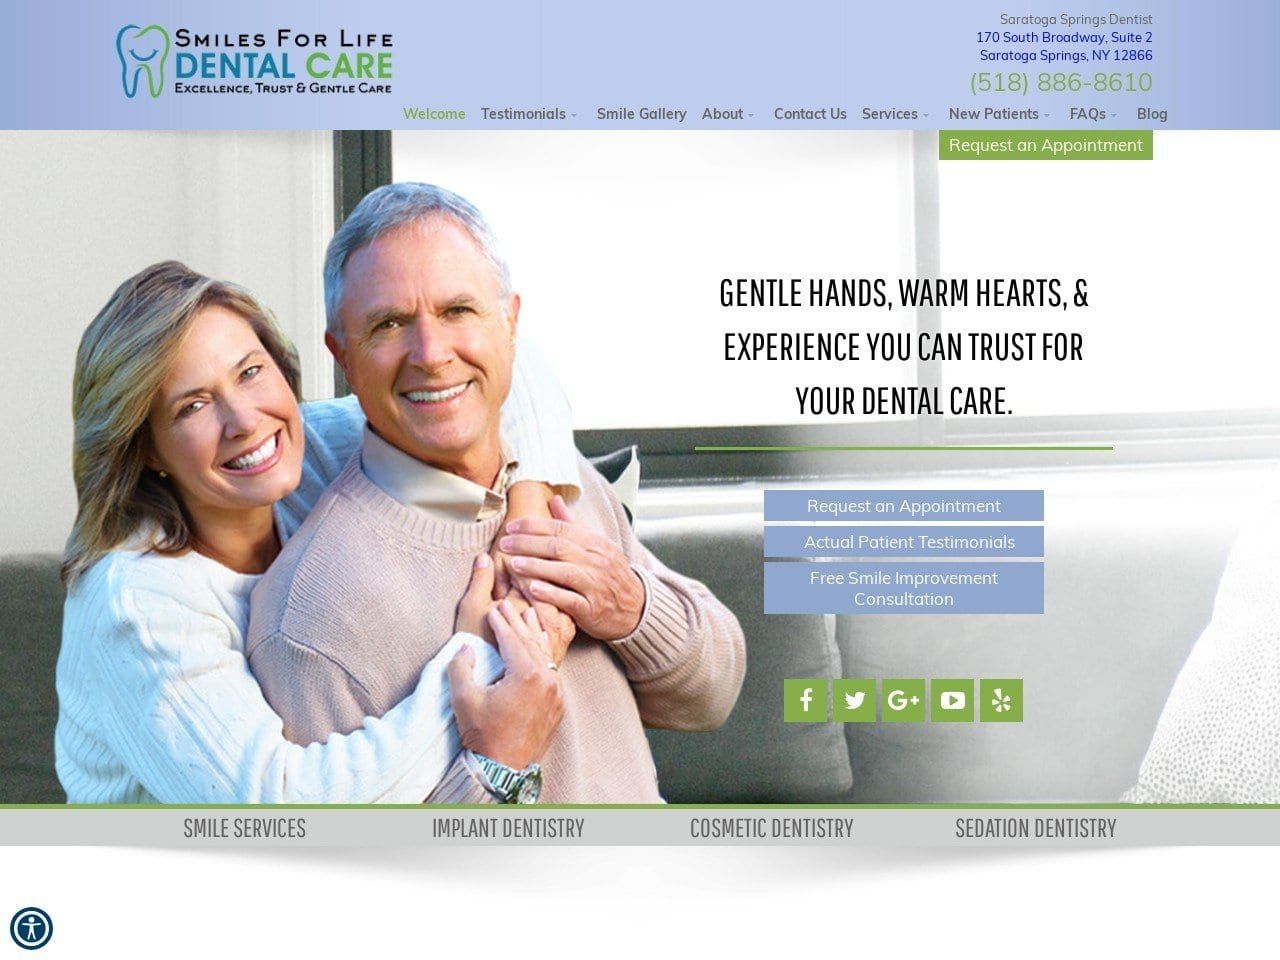 Dentist Website Screenshot from my518dentist.com